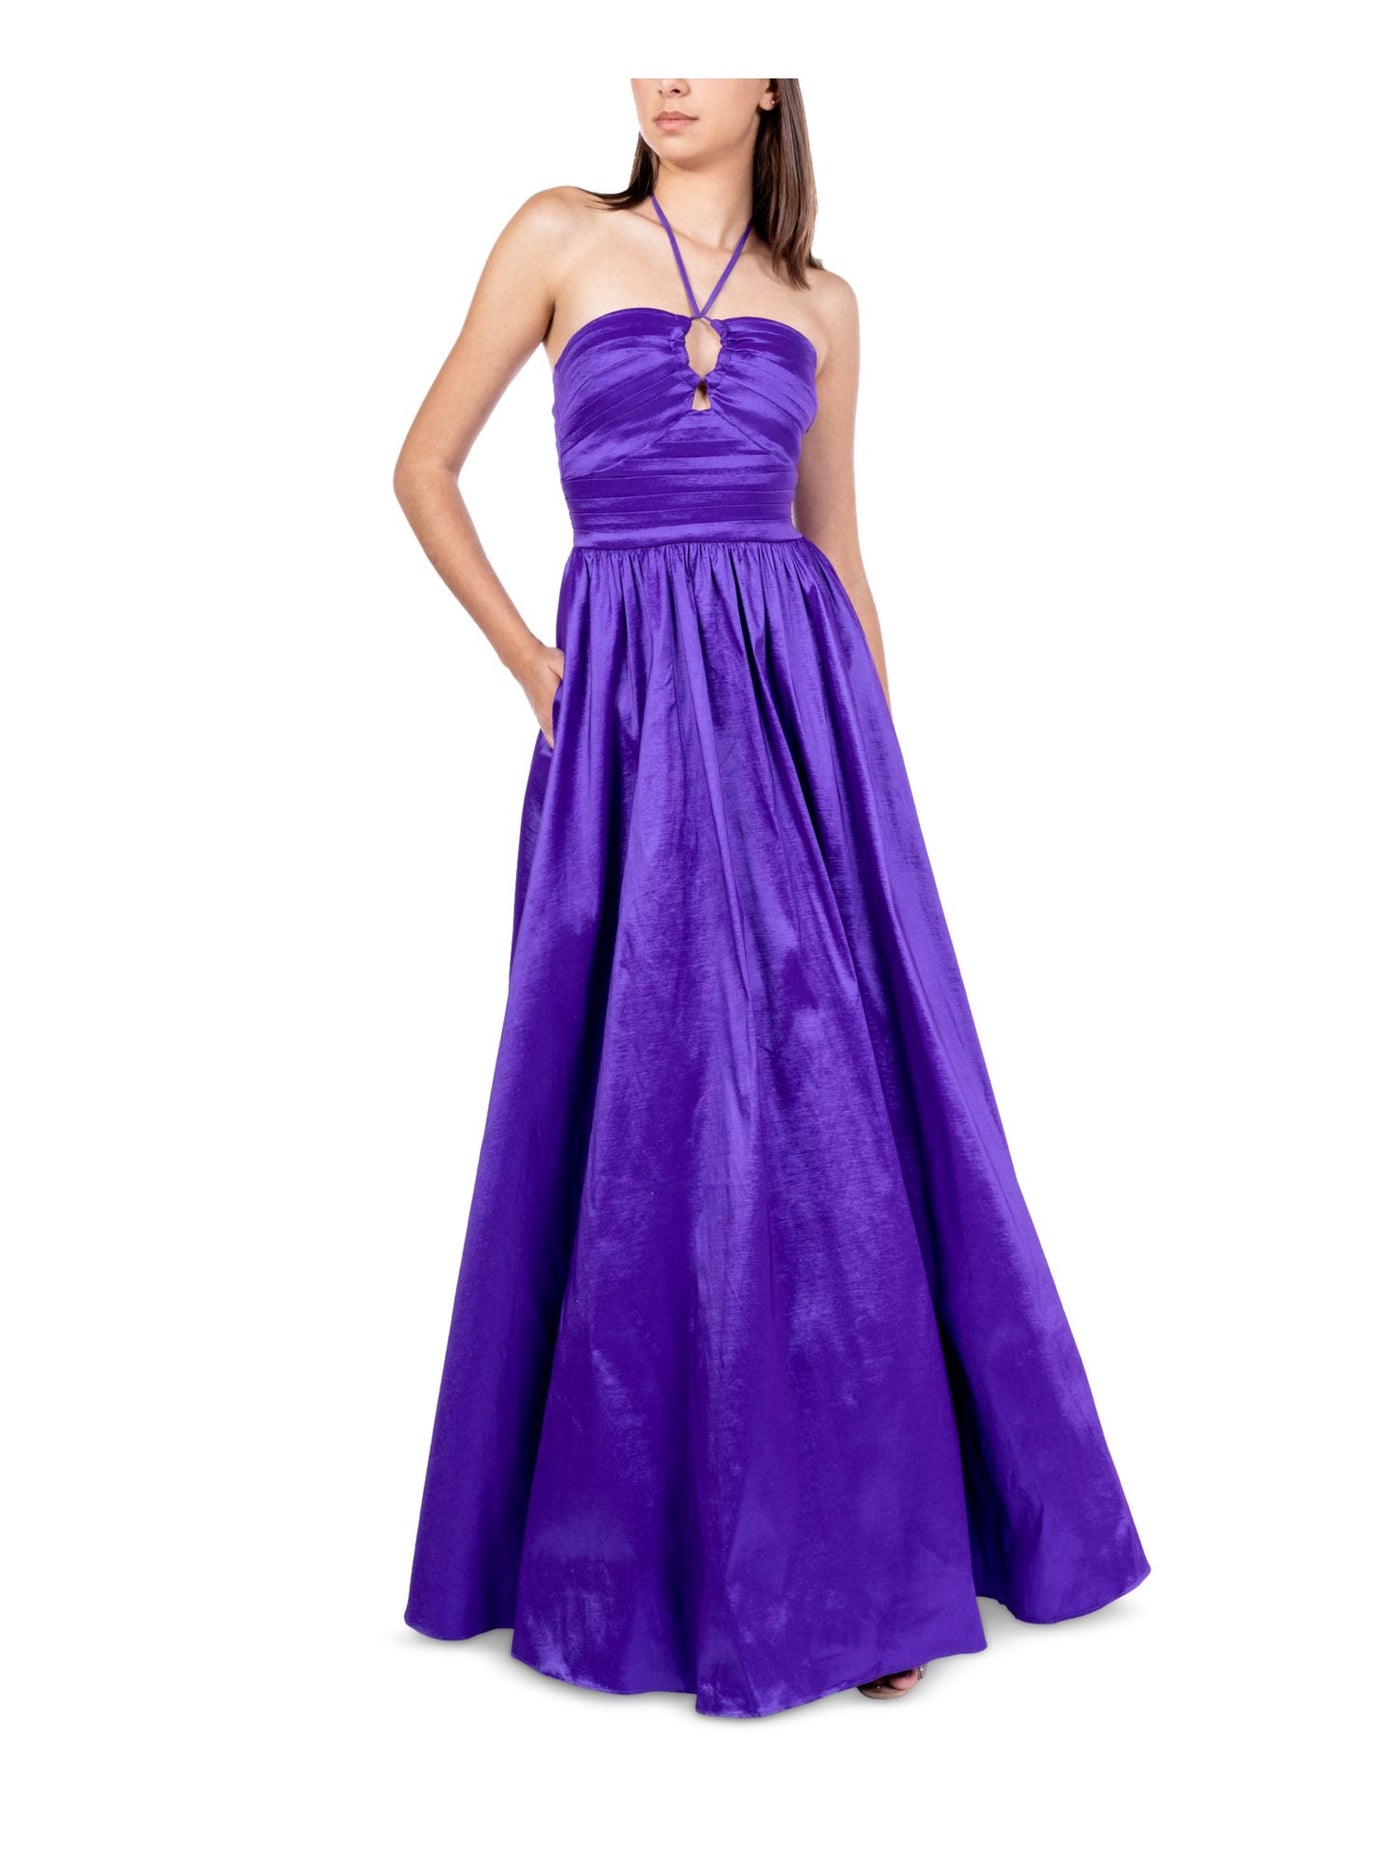 B DARLIN Womens Purple Pleated Tie Taffeta Keyhole Front Lined Sleeveless Halter Prom Gown Dress Juniors 0